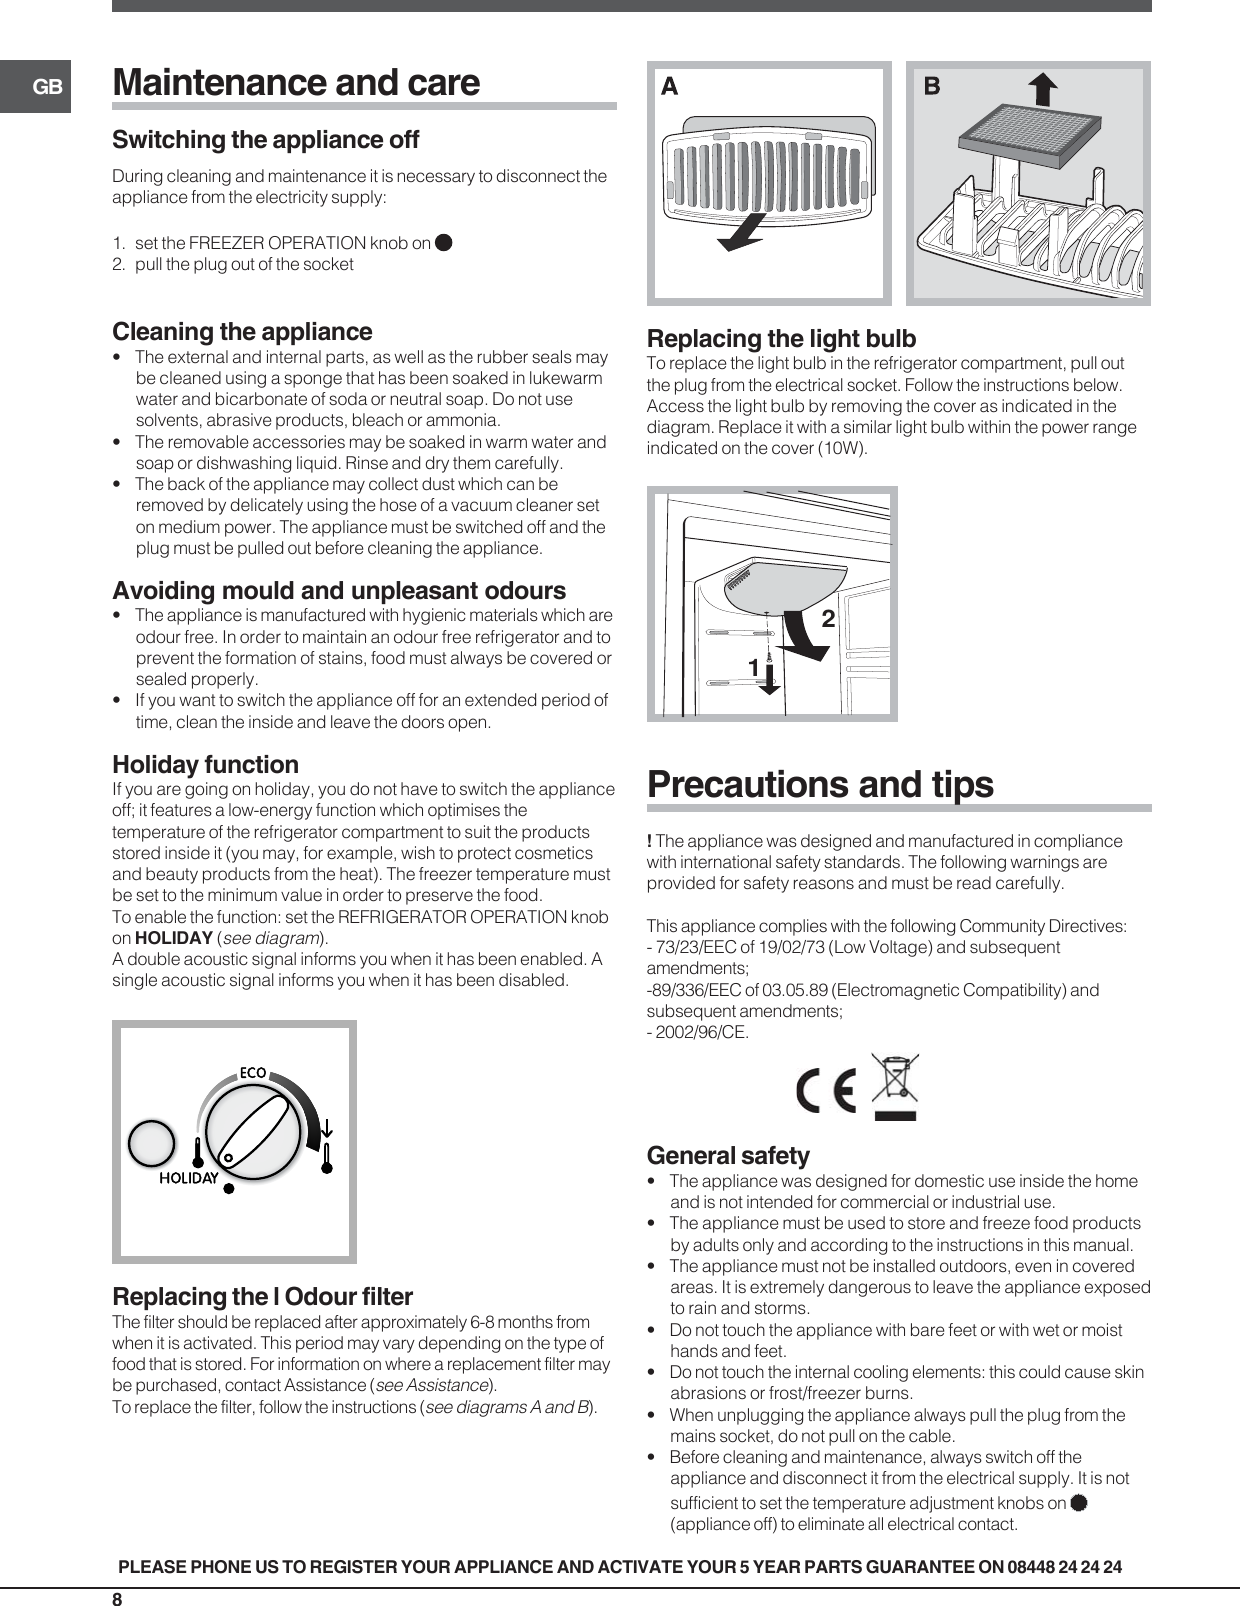 Page 8 of 12 - Indesit Indesit-Refrigerator-Ban-40-Users-Manual- 19508693000gb-tr  Indesit-refrigerator-ban-40-users-manual